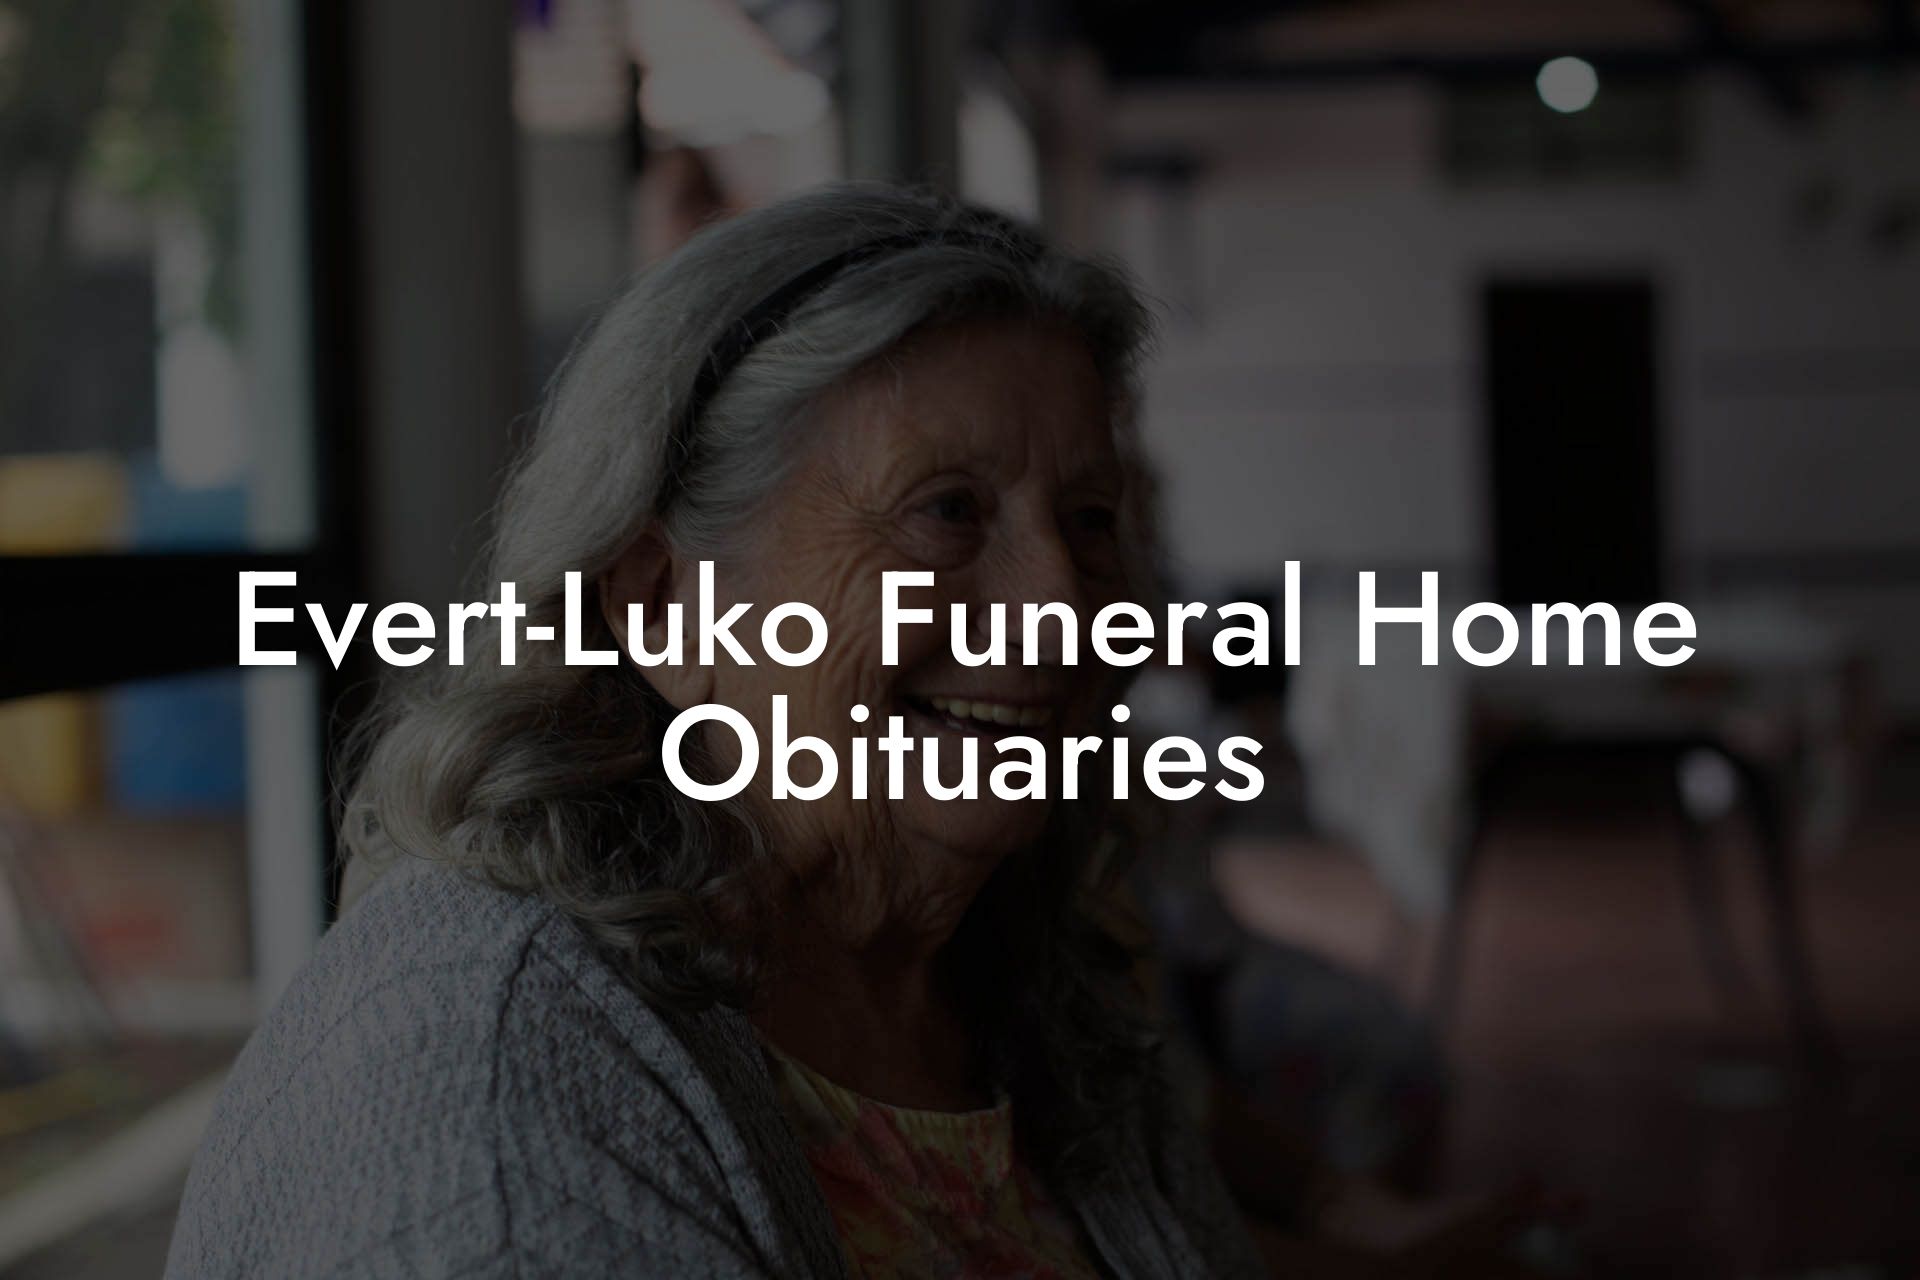 Evert-Luko Funeral Home Obituaries